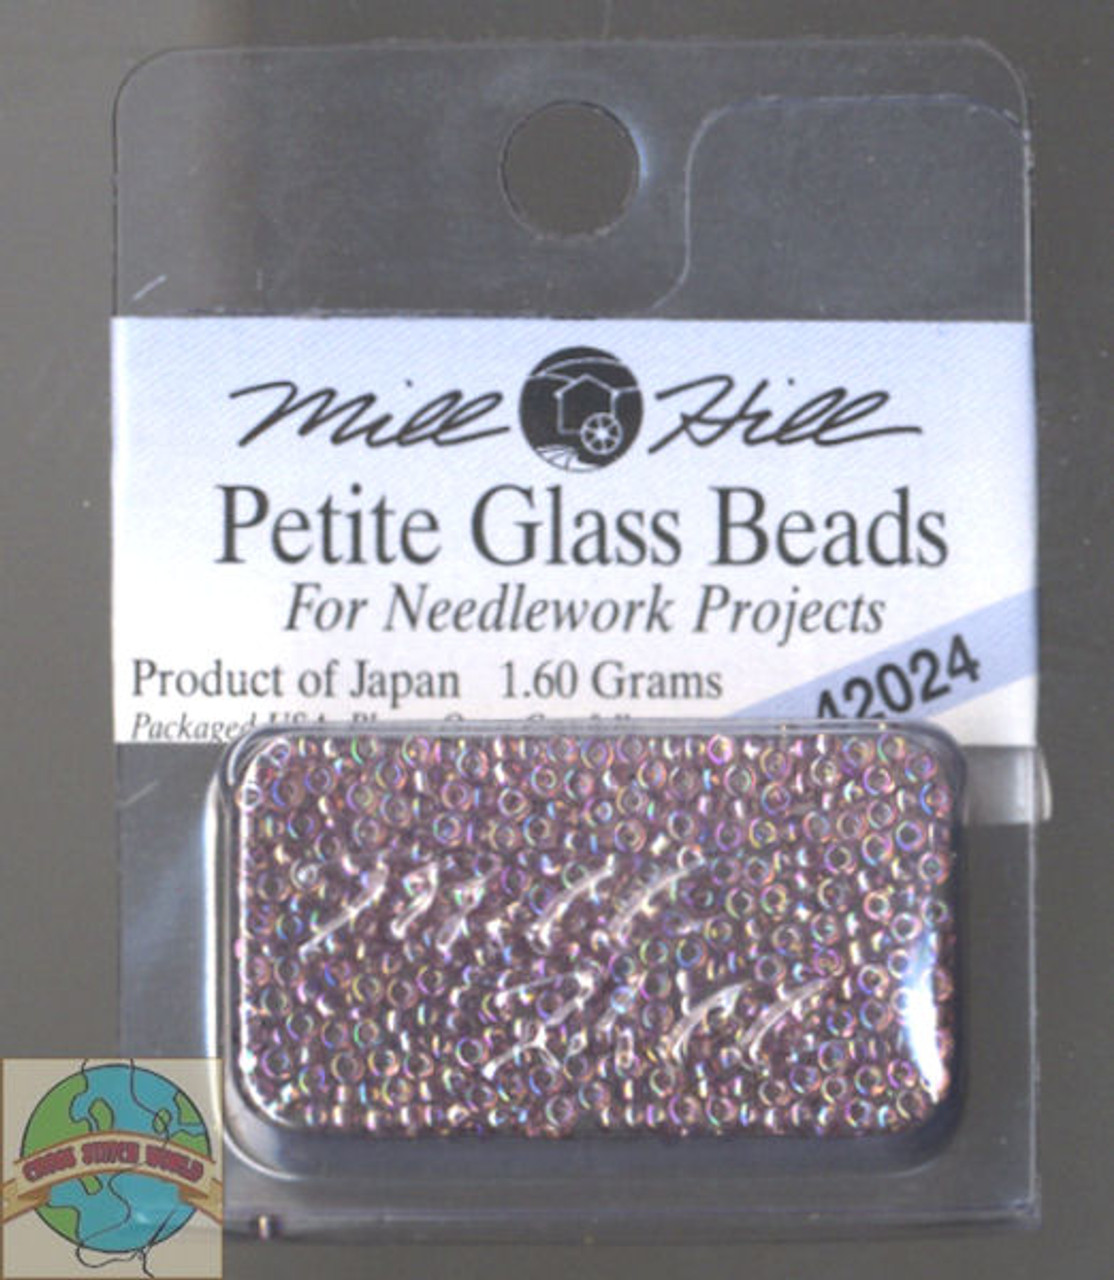 Mill Hill Petite Glass Beads 1.60g Heather Mauve #42024